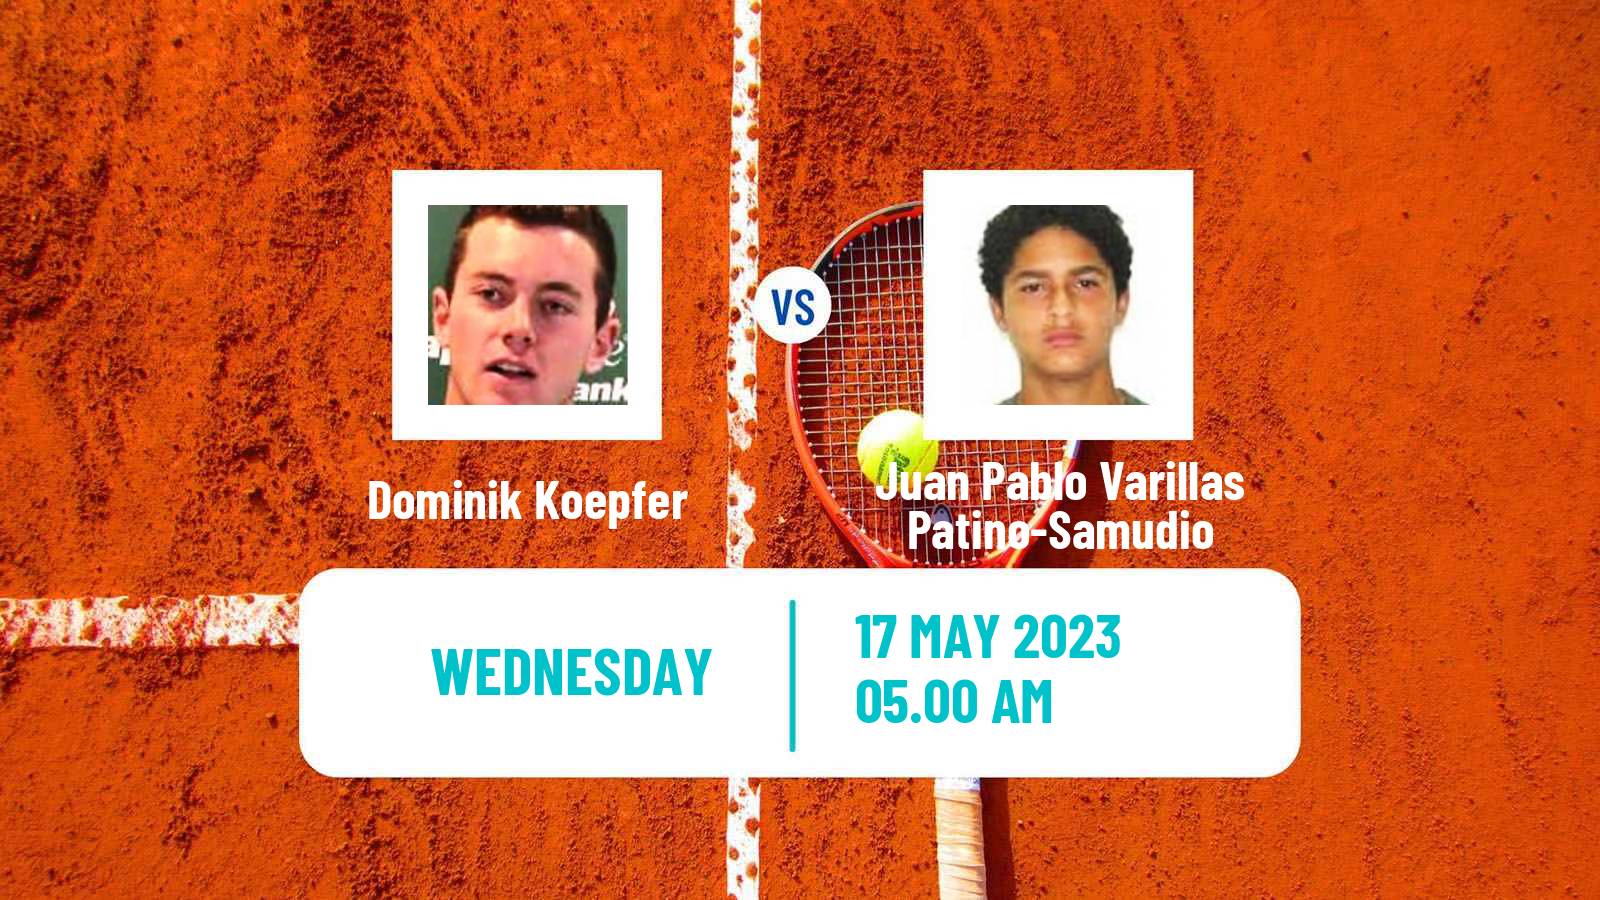 Tennis Turin 2 Challenger Men Dominik Koepfer - Juan Pablo Varillas Patino-Samudio